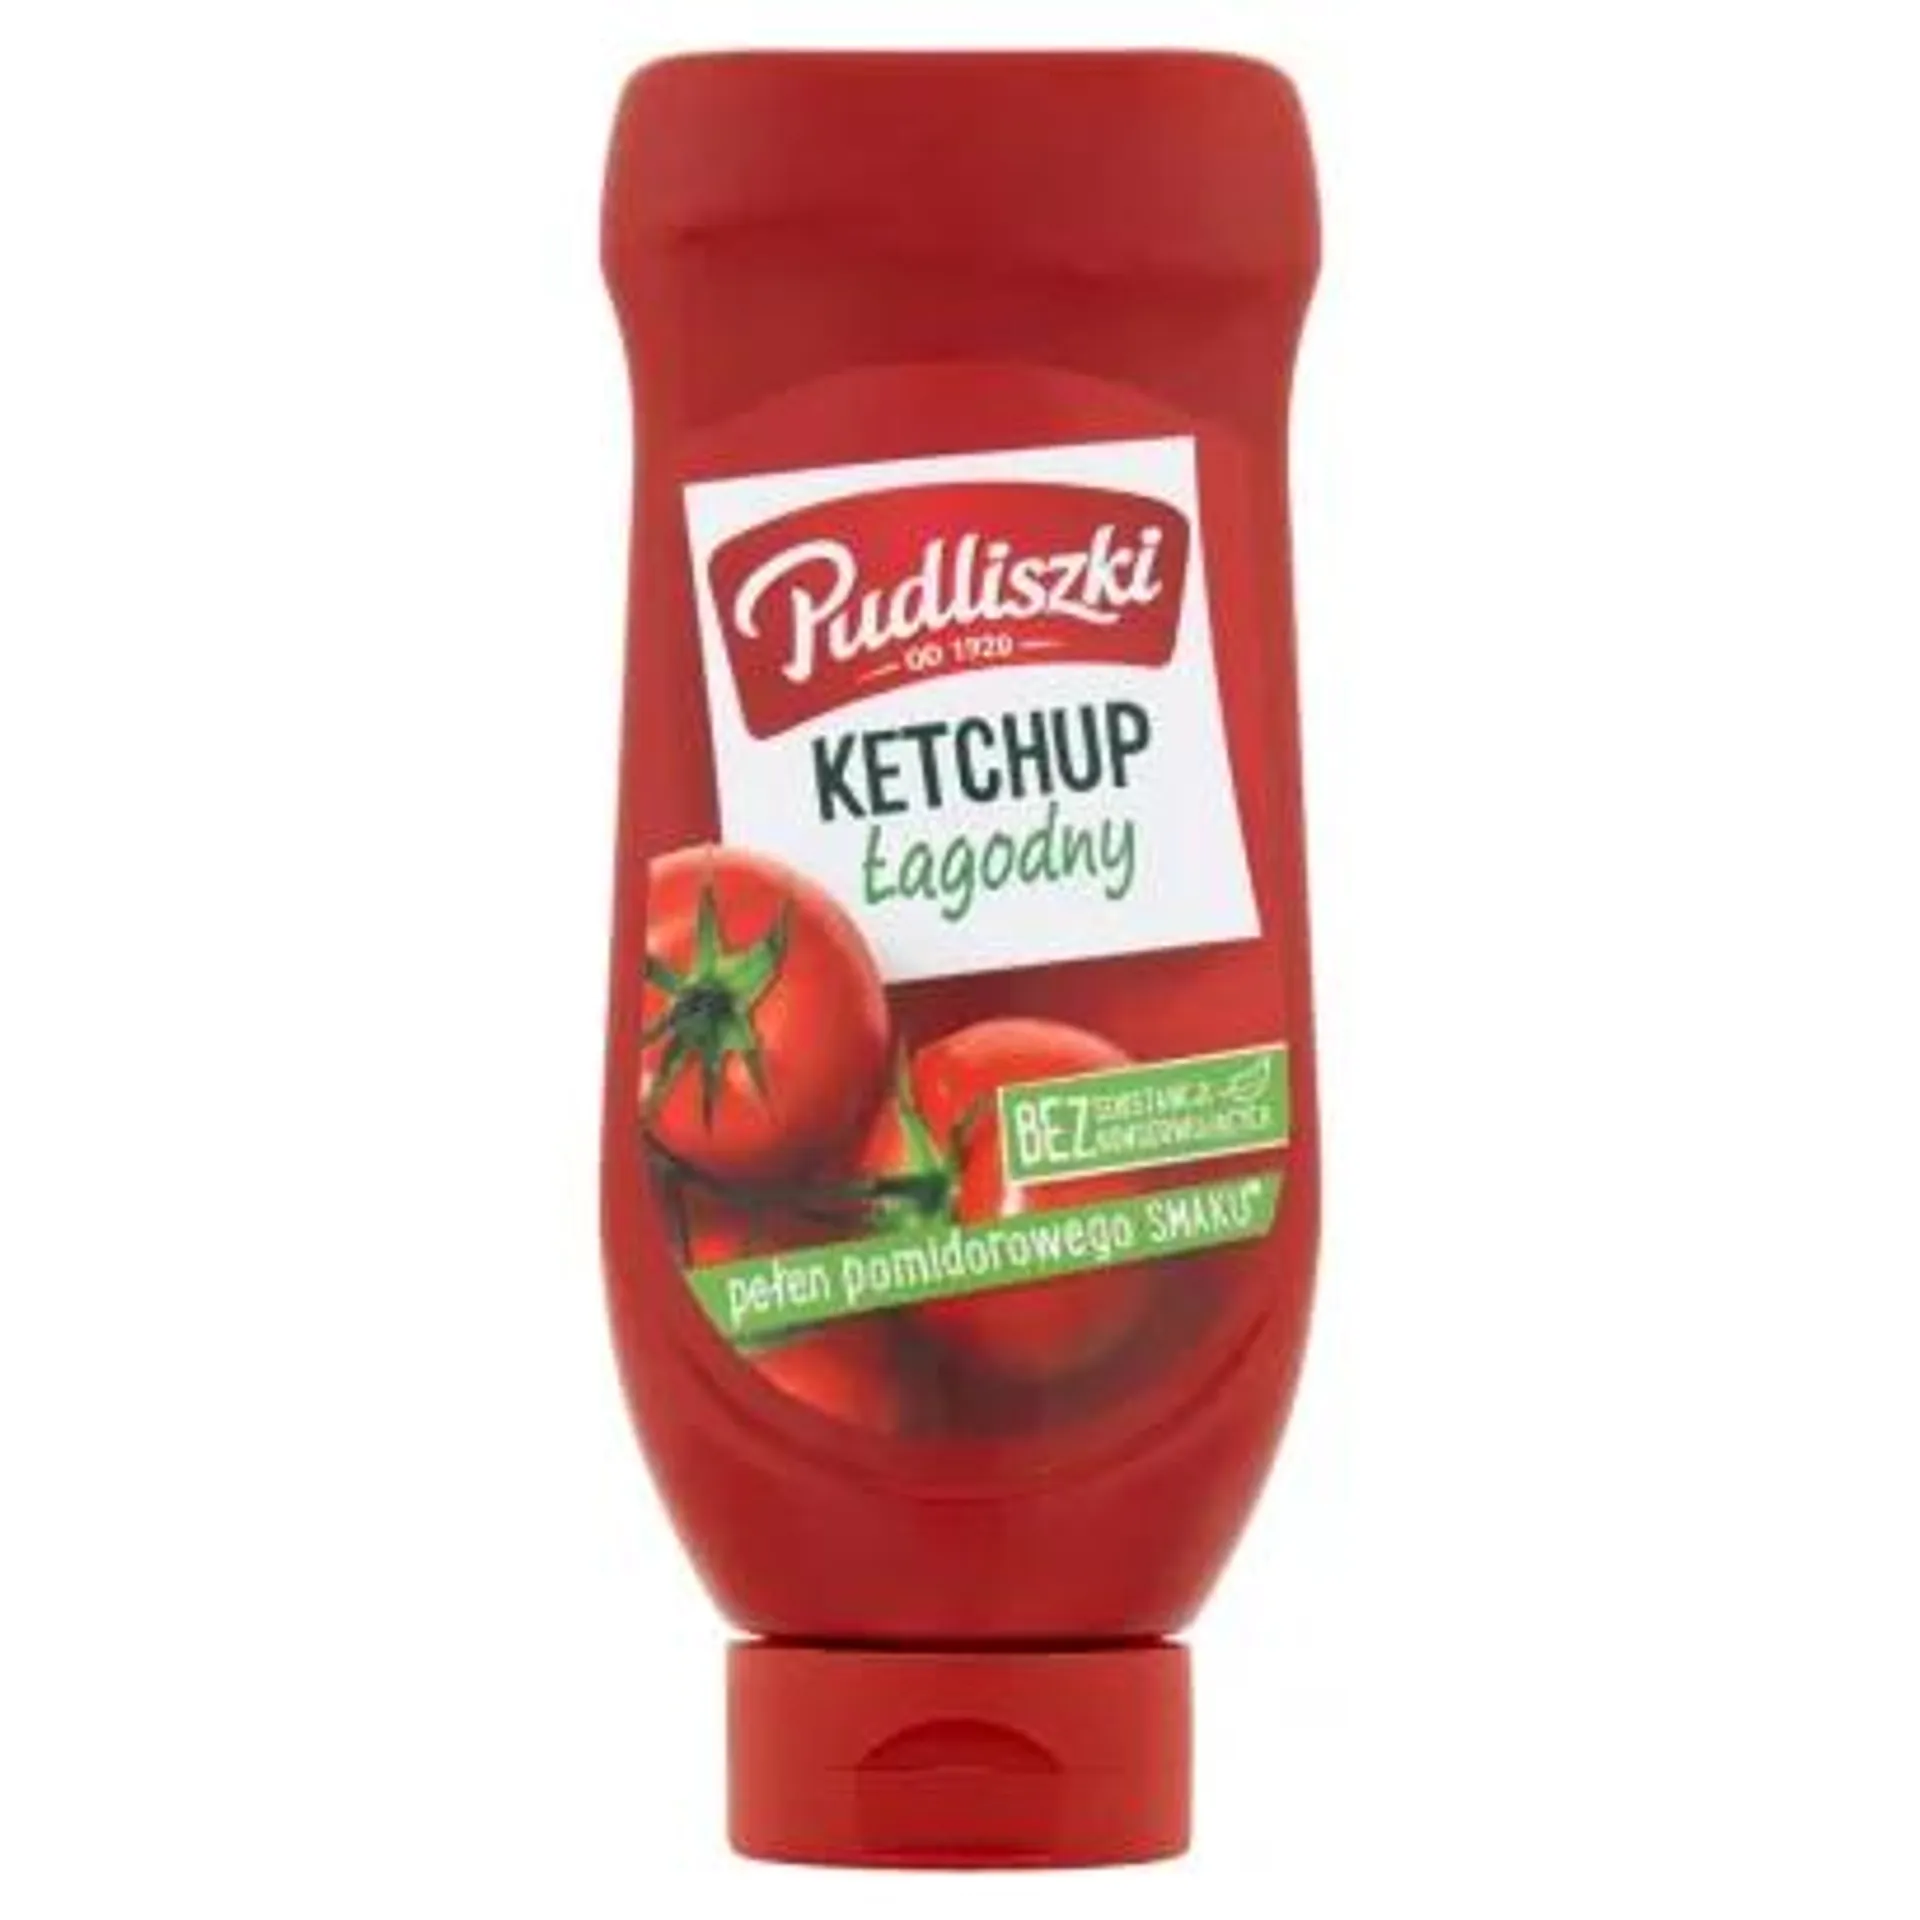 Pudliszki - Ketchup łagodny